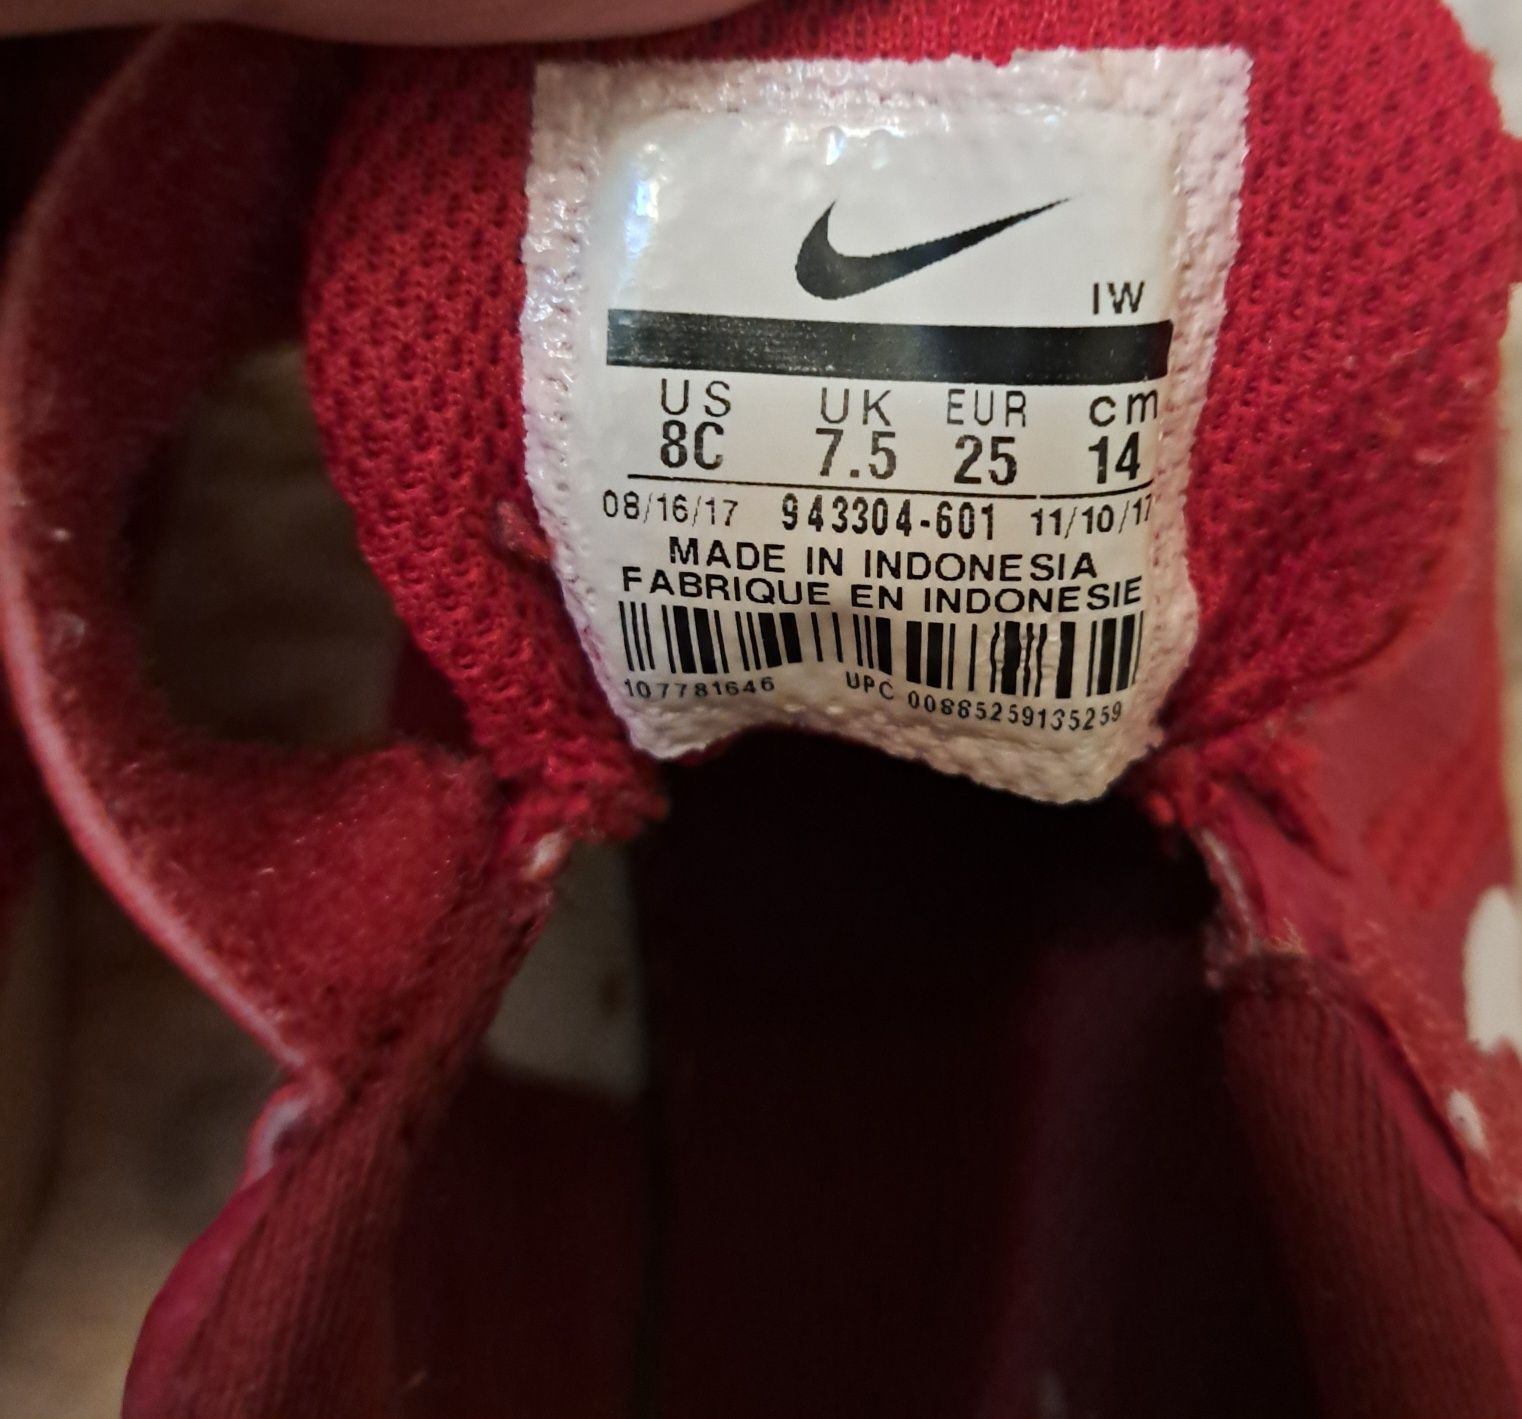 Adidasi Nike ,mărimea 25 (14cm)